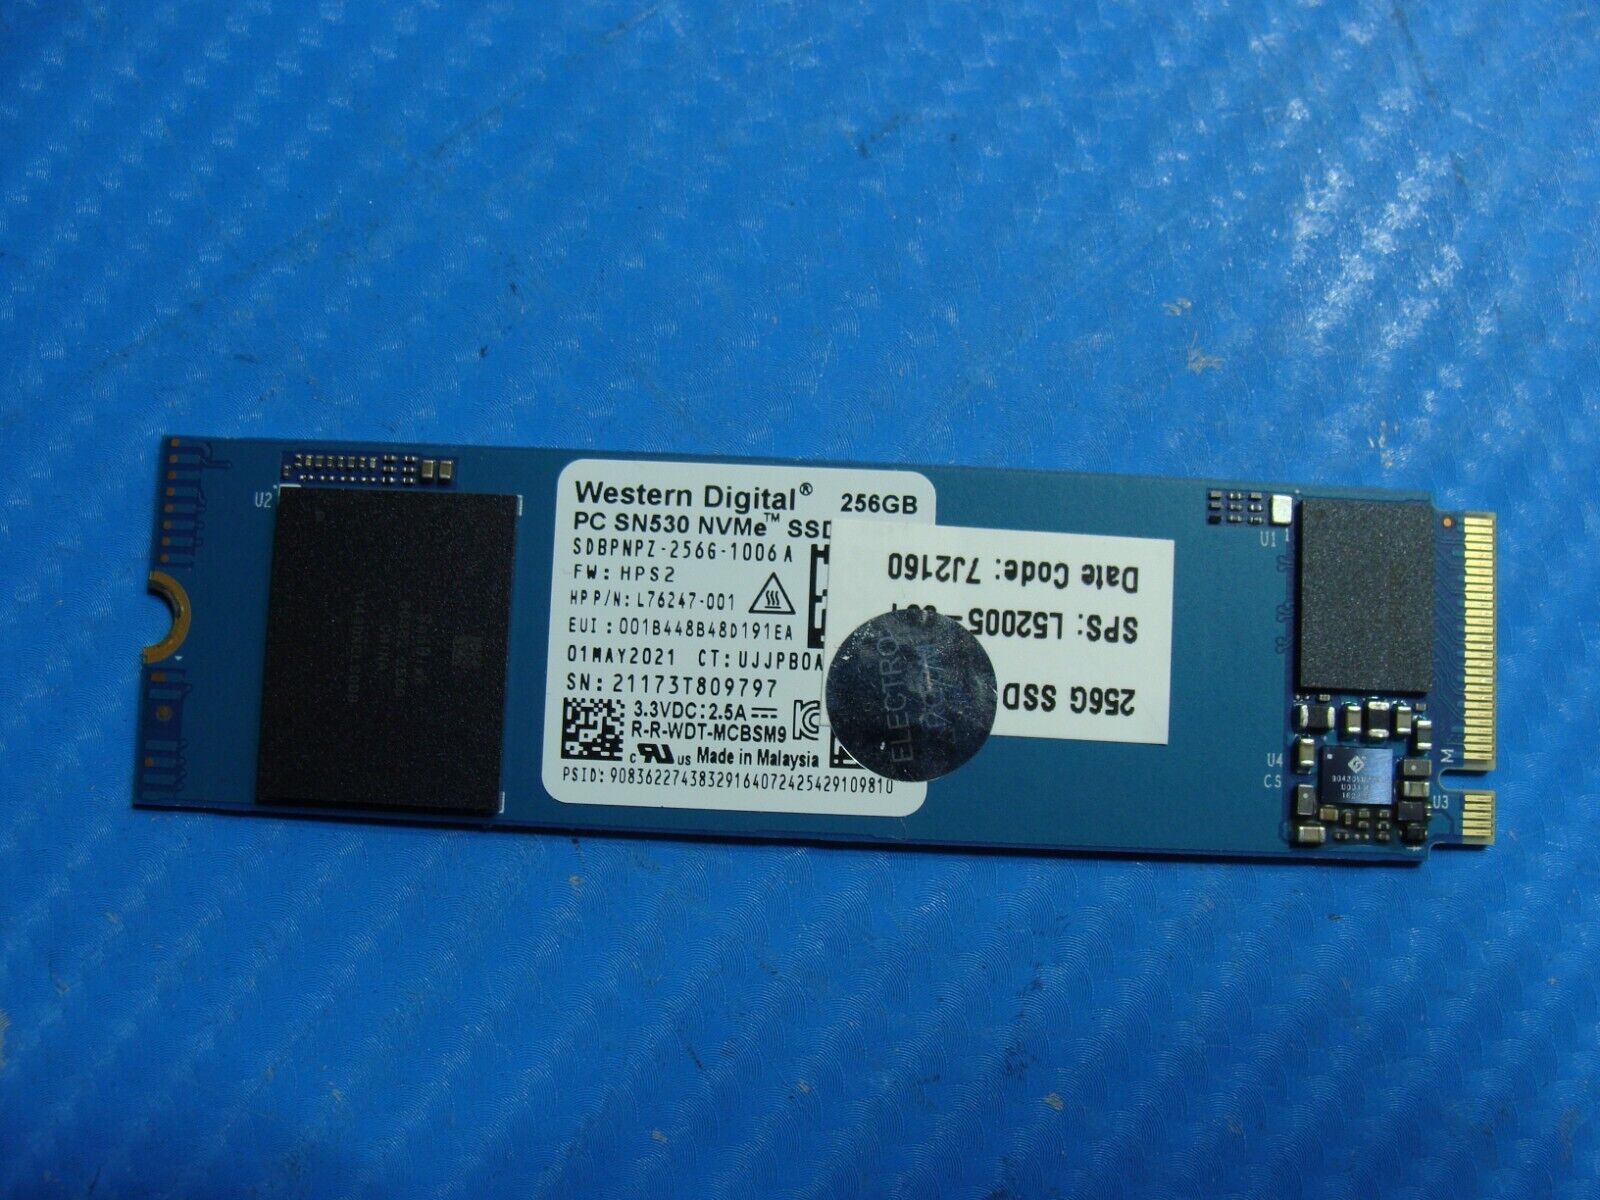 HP 15-dw3033dx WD Western Digital 256GB NVMe SSD SDBPNPZ-256G-1006 L52005-001